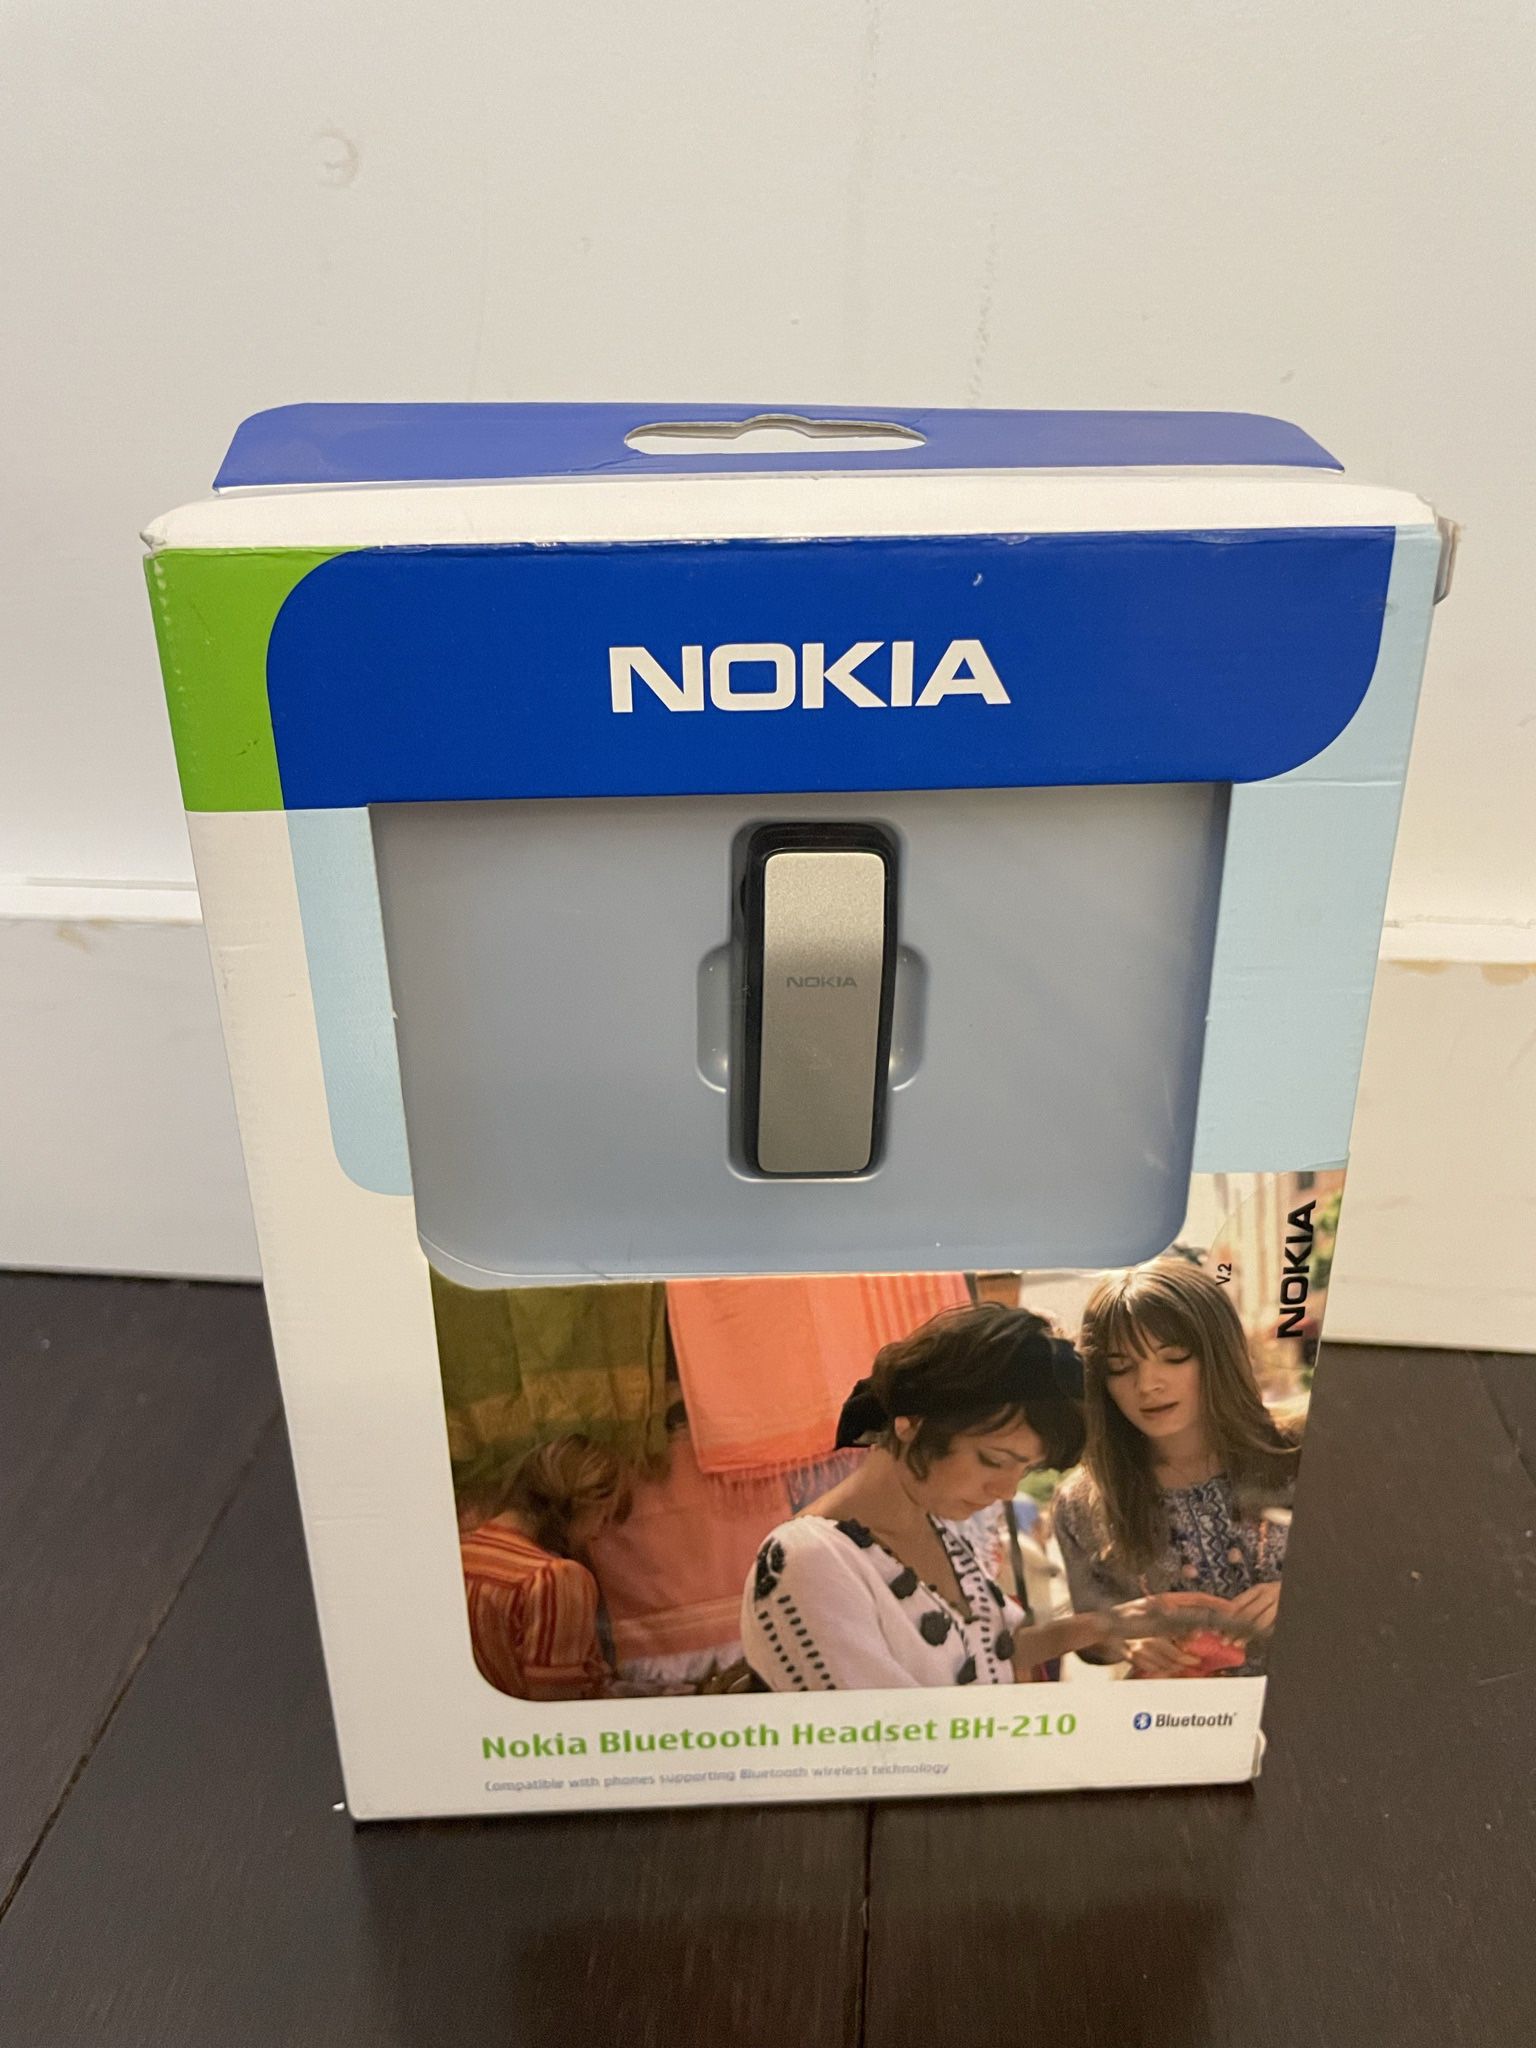 Nokia BH-210 Bluetooth Headset - New In-box